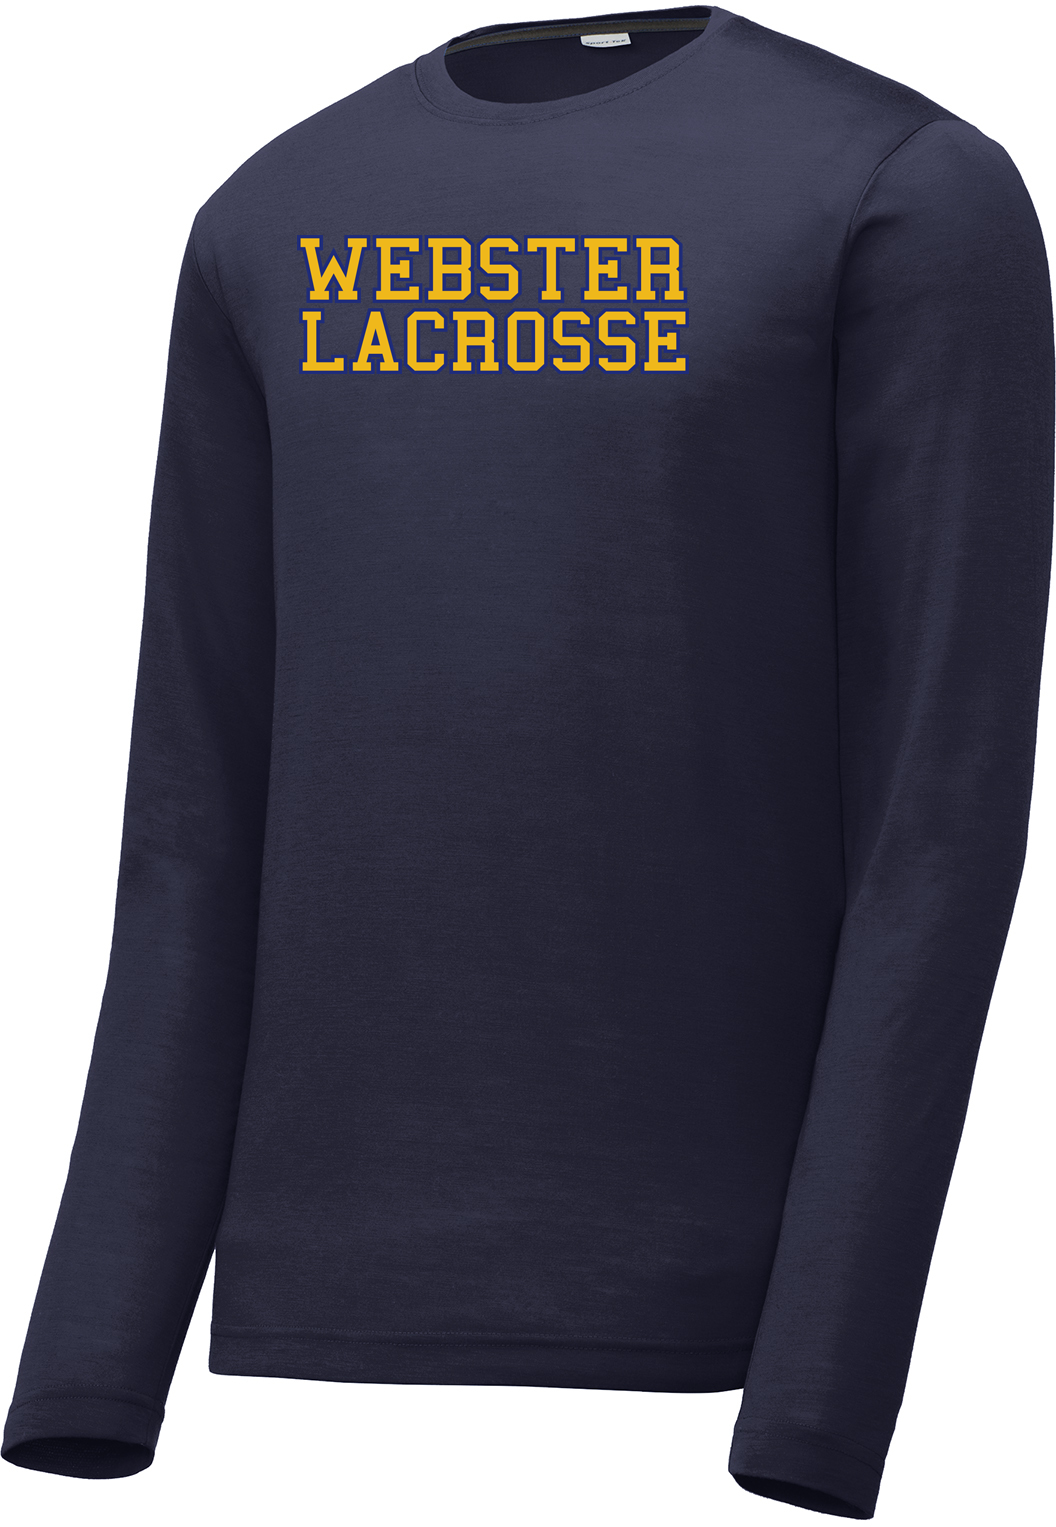 Webster Lacrosse Men's Navy Long Sleeve CottonTouch Performance Shirt